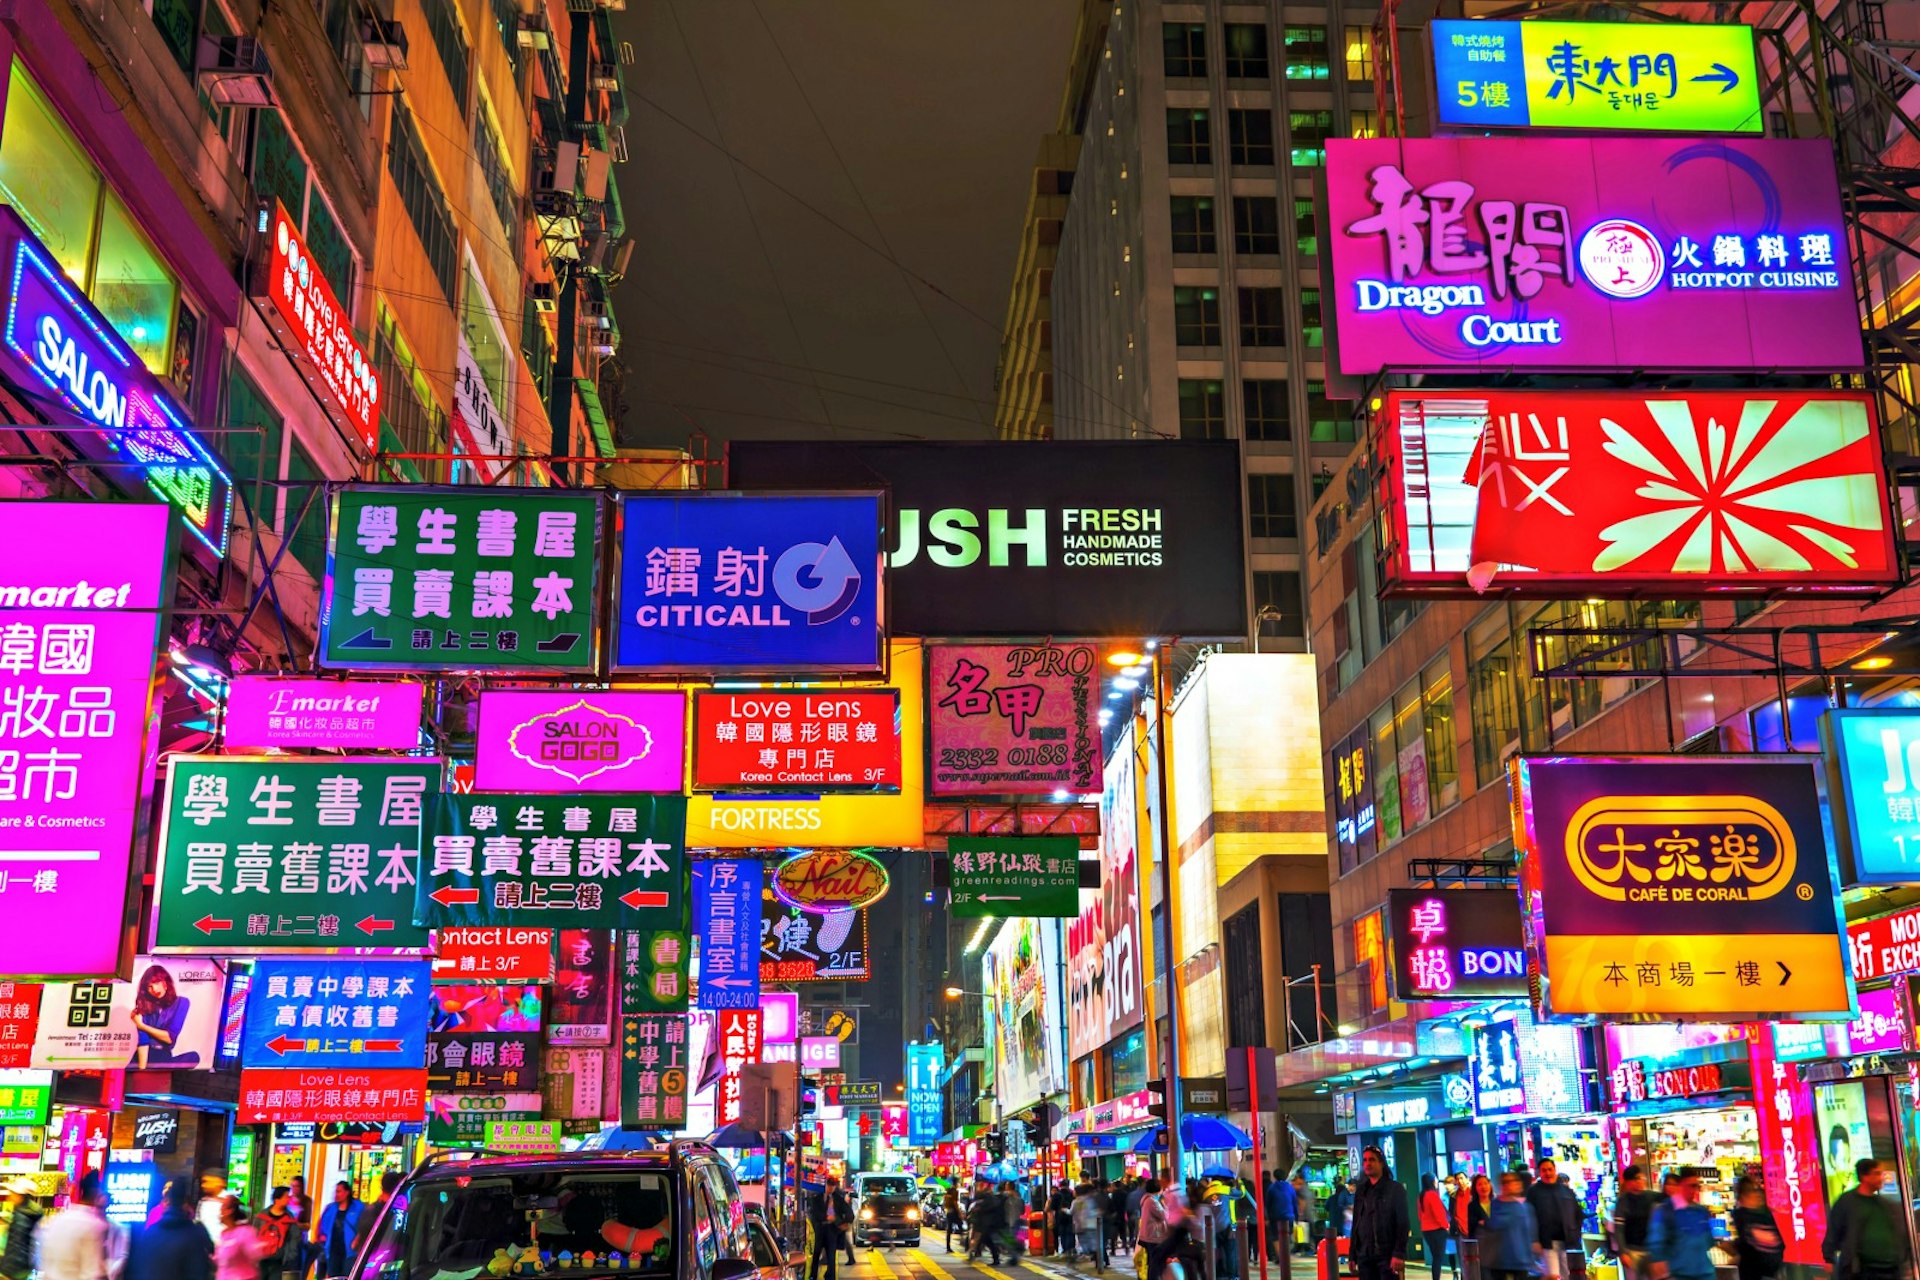 Hong Kong's neon lights burst into an explosion of colour at night © Christian Mueller / Shutterstock